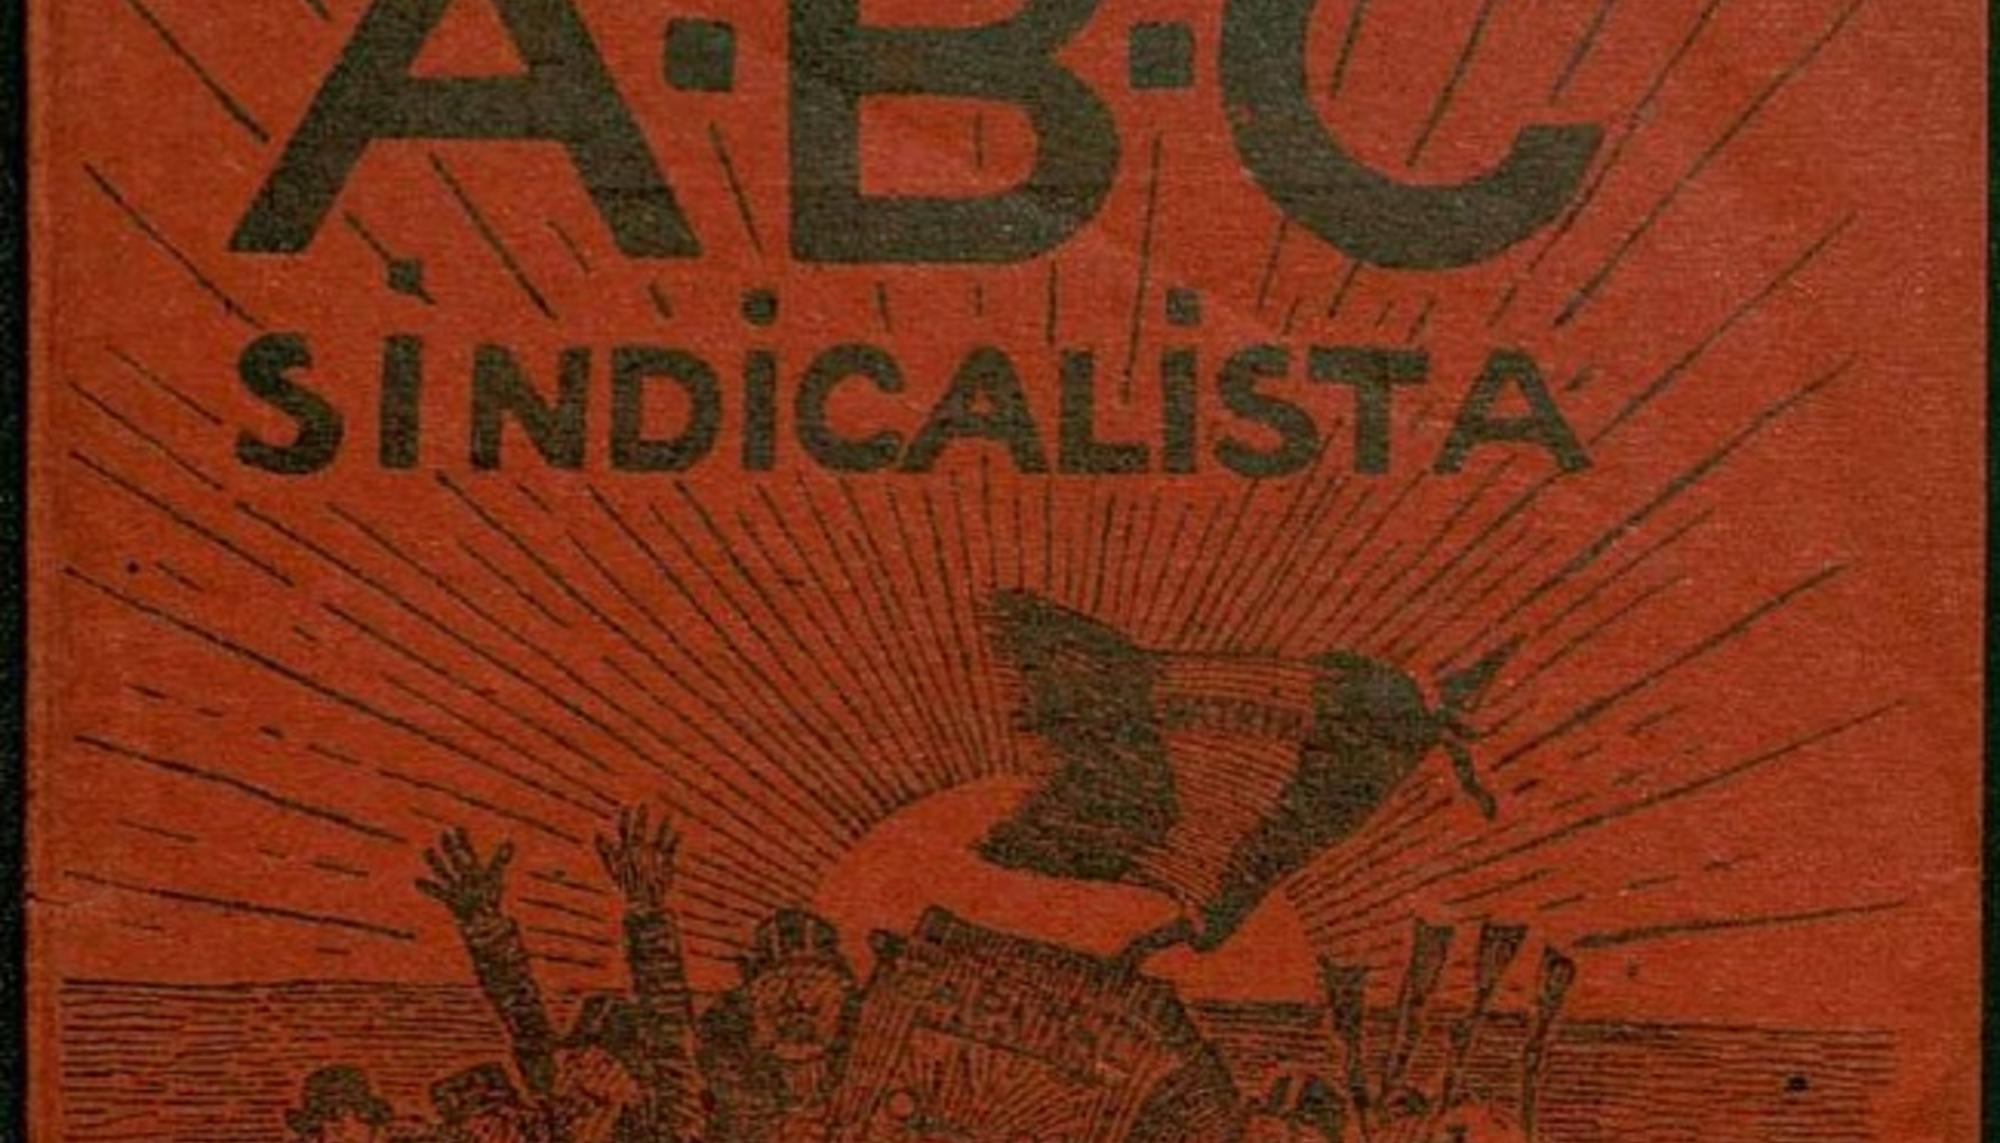 ABC sindicalista